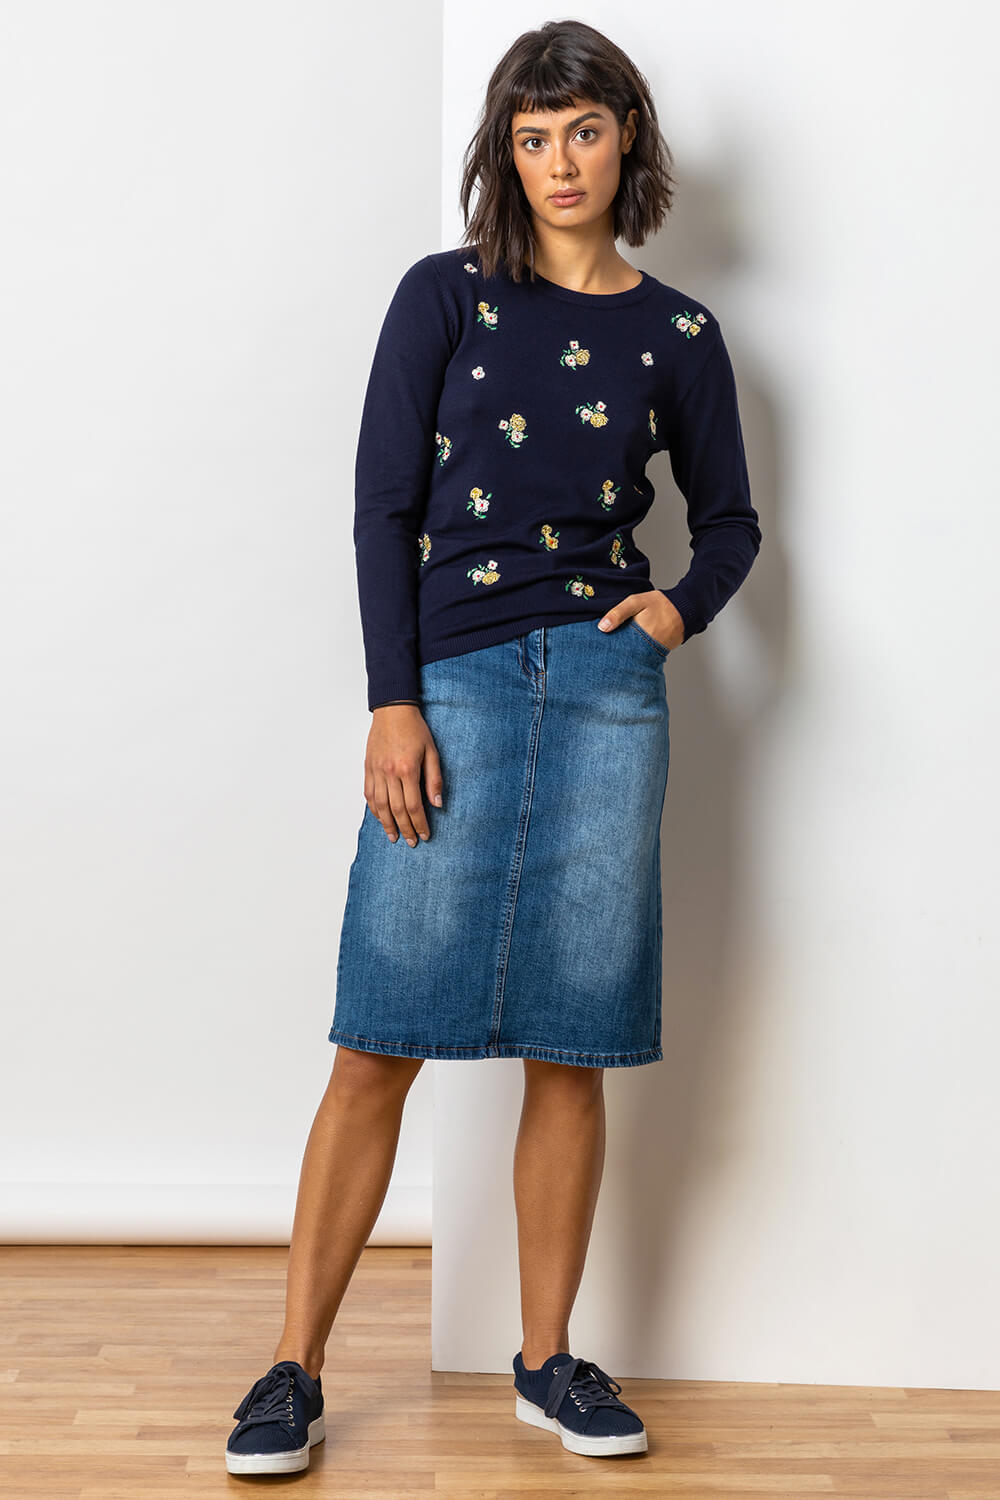 Shorts & Skirts, Name:Demin Skirt Type:Straight Fabric:Denim Patter